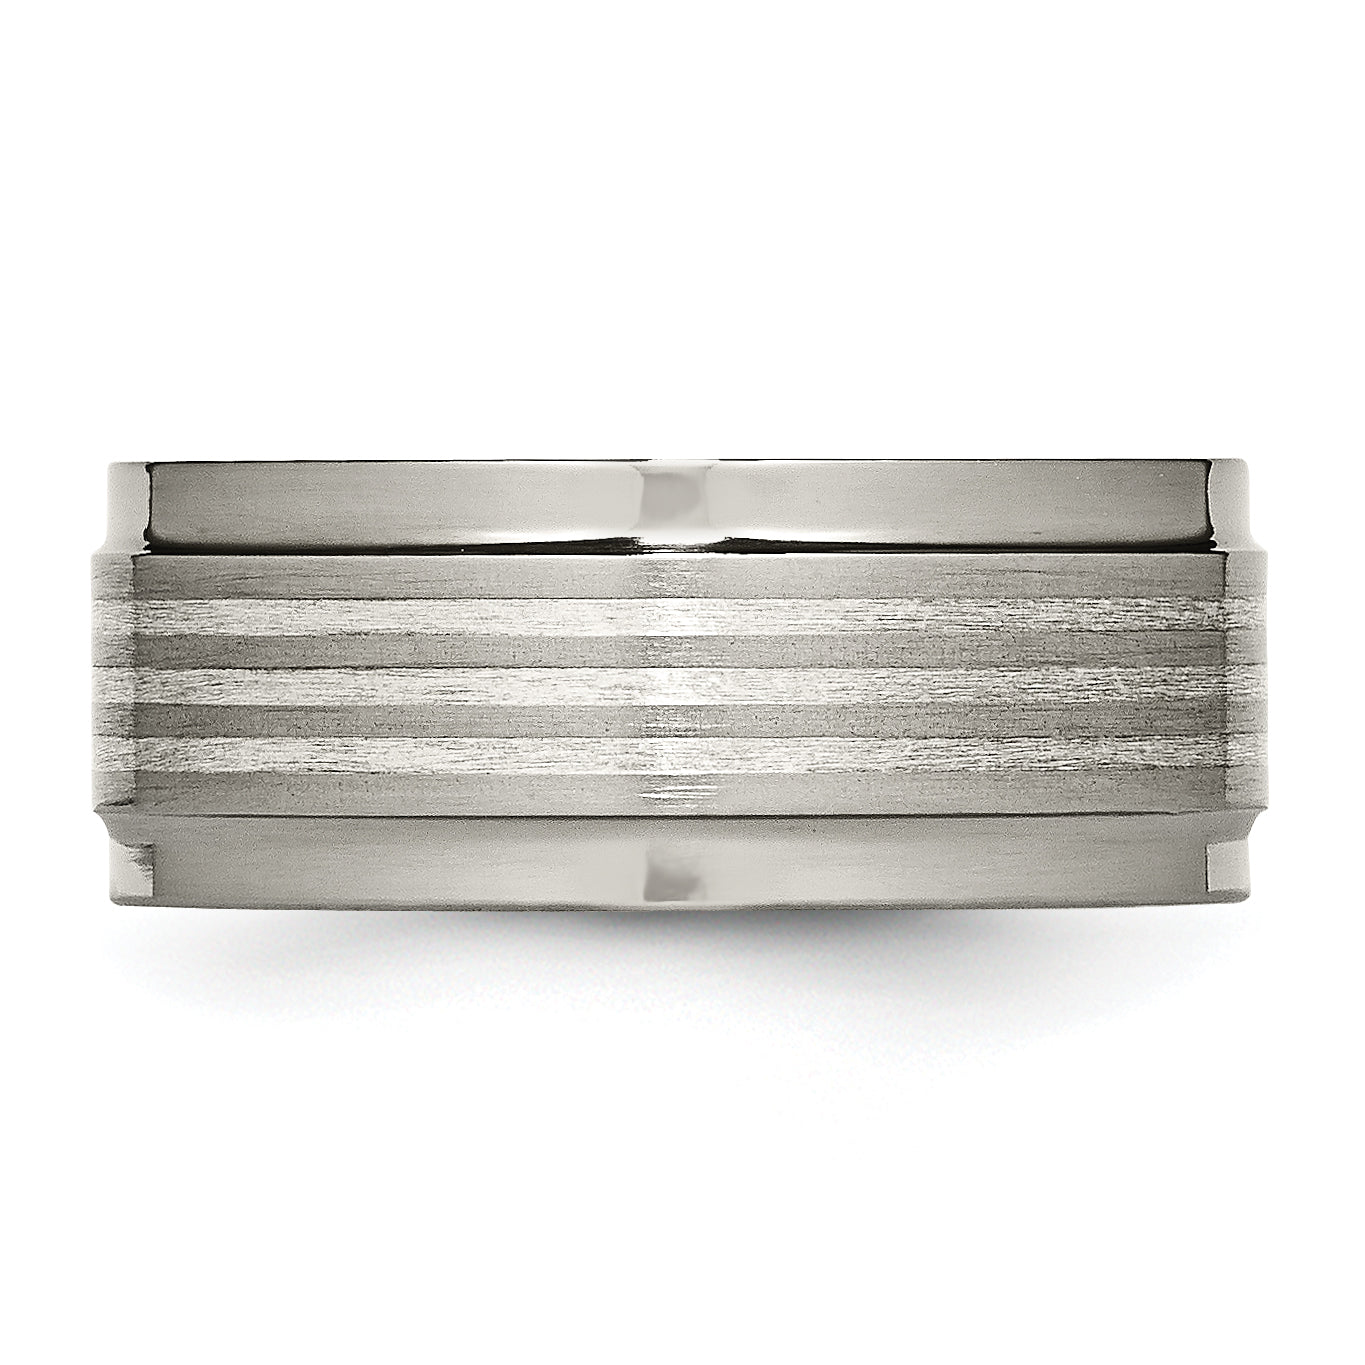 Titanium With Argentium .925 Silver Inlay Ridged Edge 9mm Band